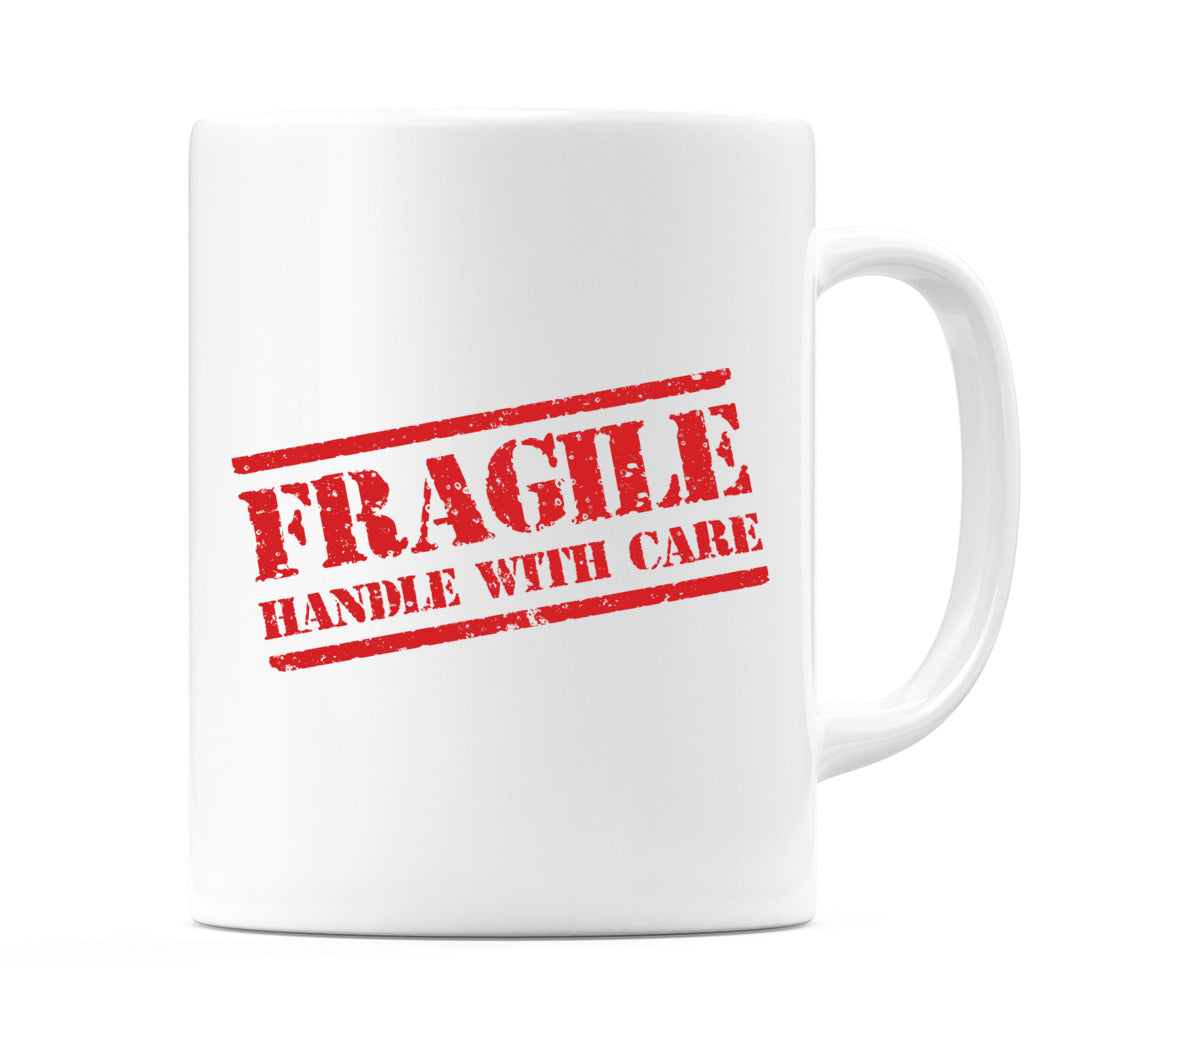 Fragile Handle With Care Mug